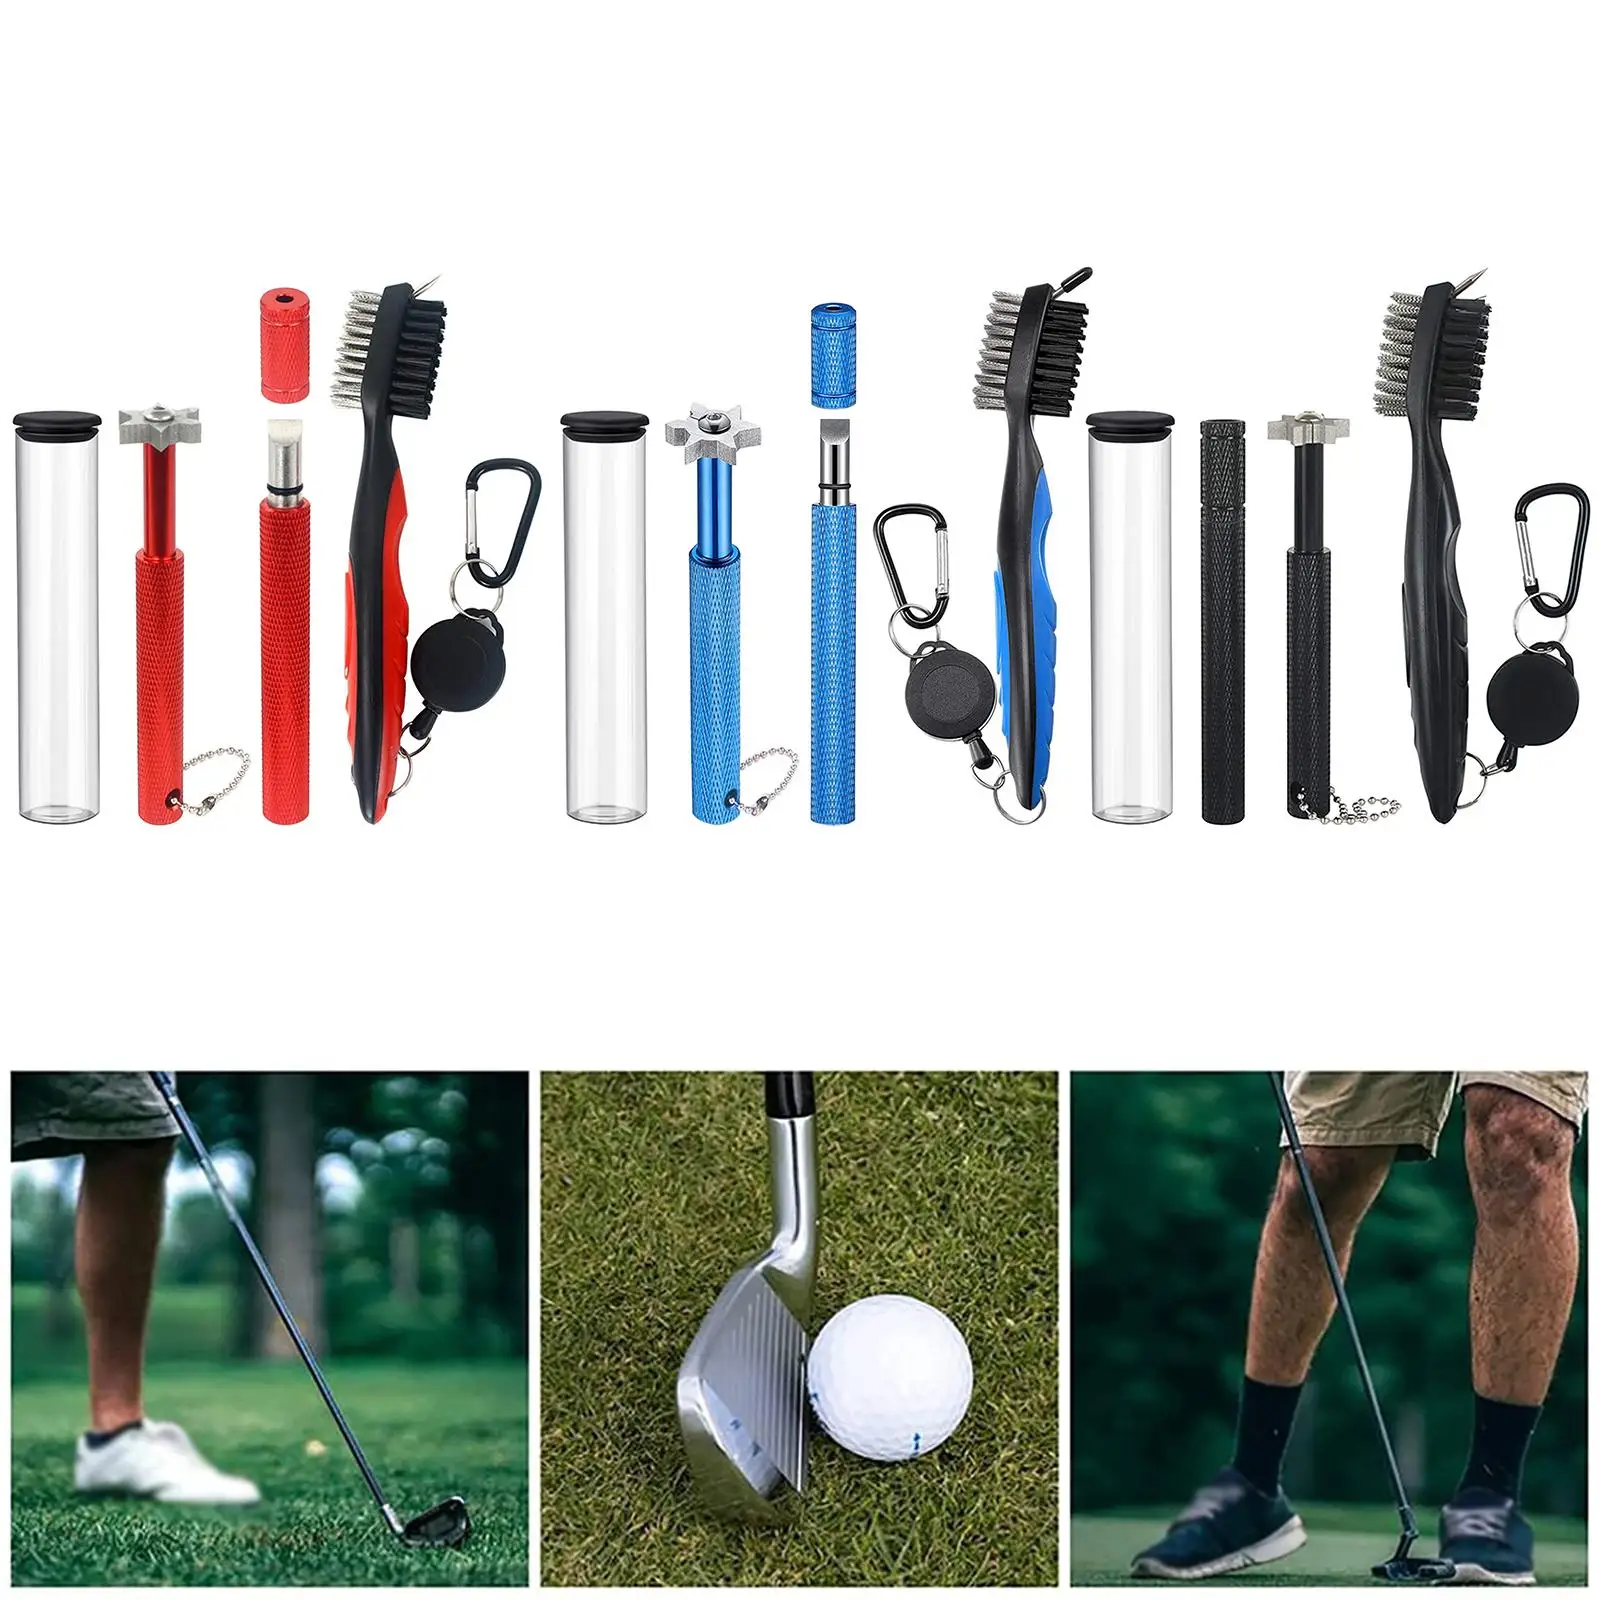 Golf Club Cleaner Golf Club Brush Groove Sharpener Golf Brush Tool Kits Golf Club Cleaning Kit for Sharpening Golf Accessories